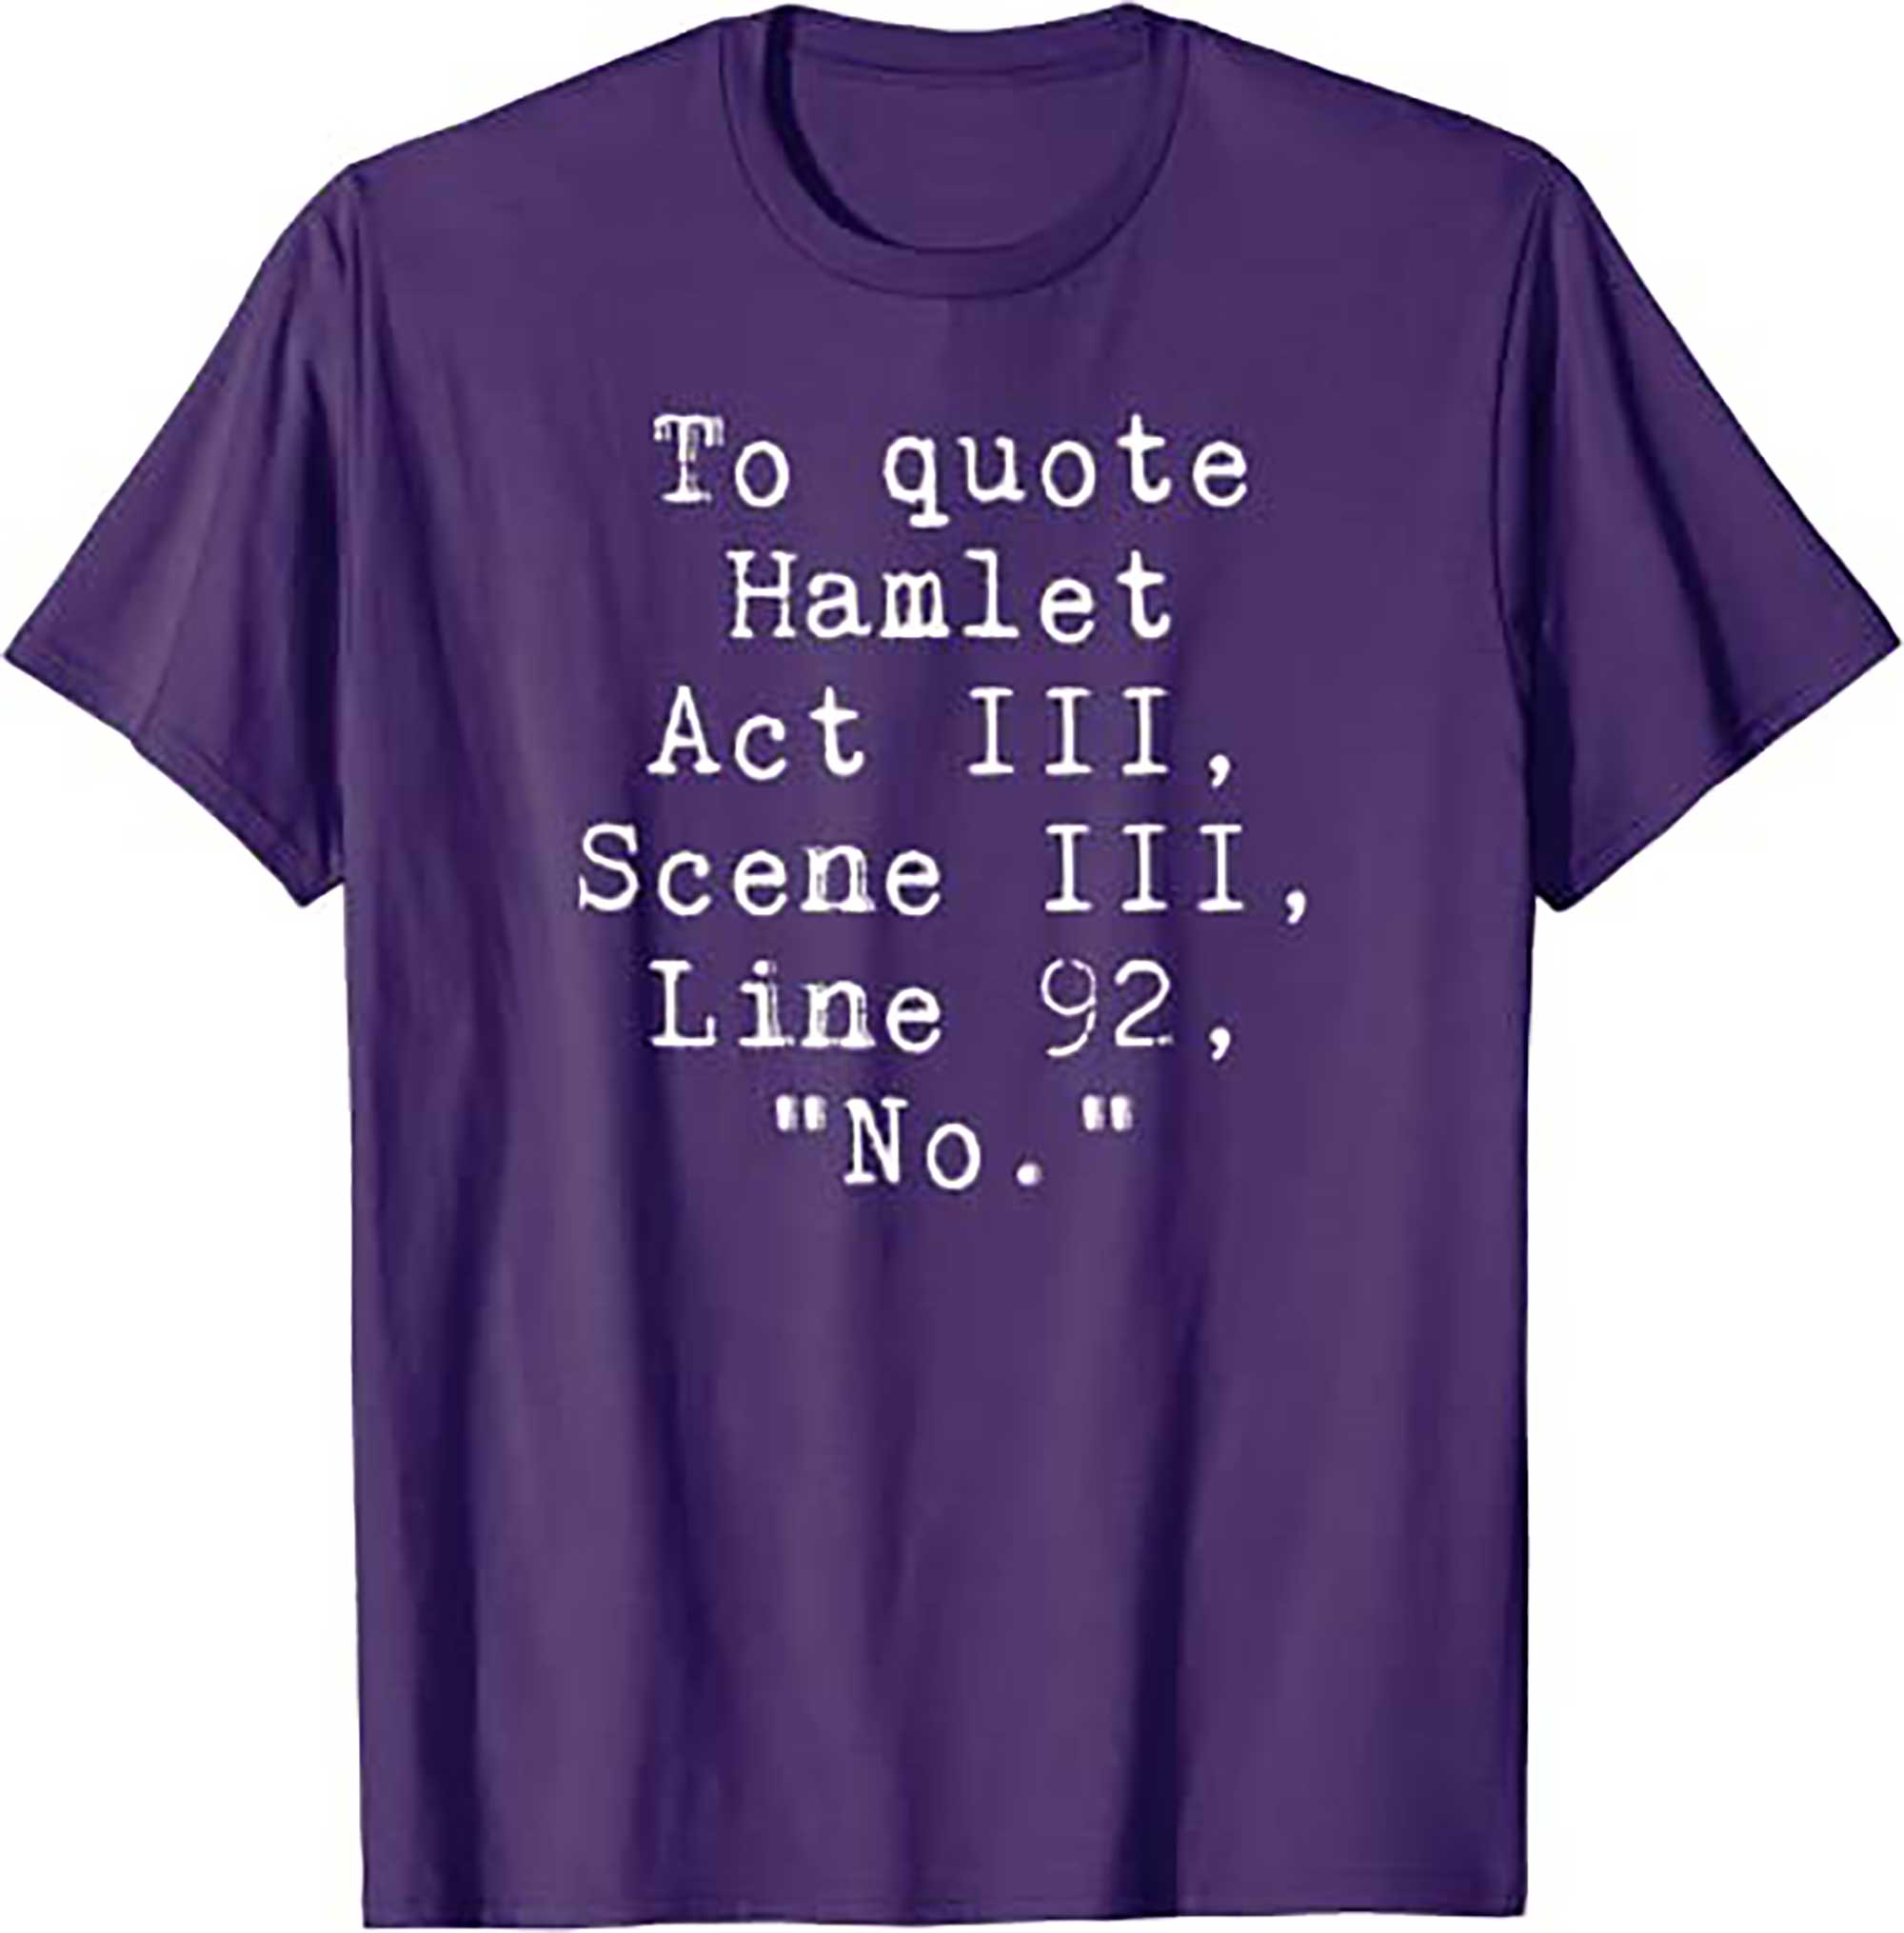 Skitongift To Quote Hamlet Funny Literary T Shirt for Women Men Kids